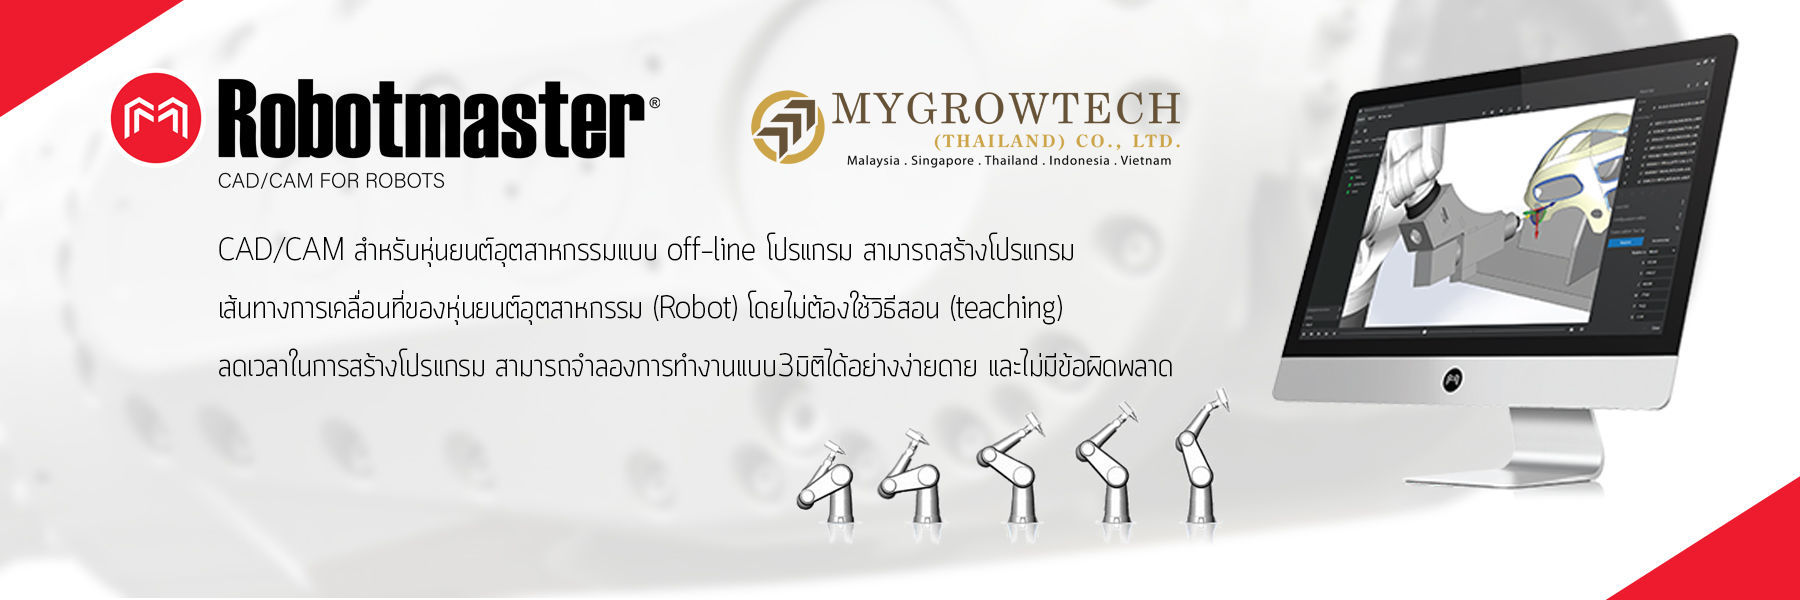 Robotmaster CAD CAM for Robots - Mygrowtechthailand